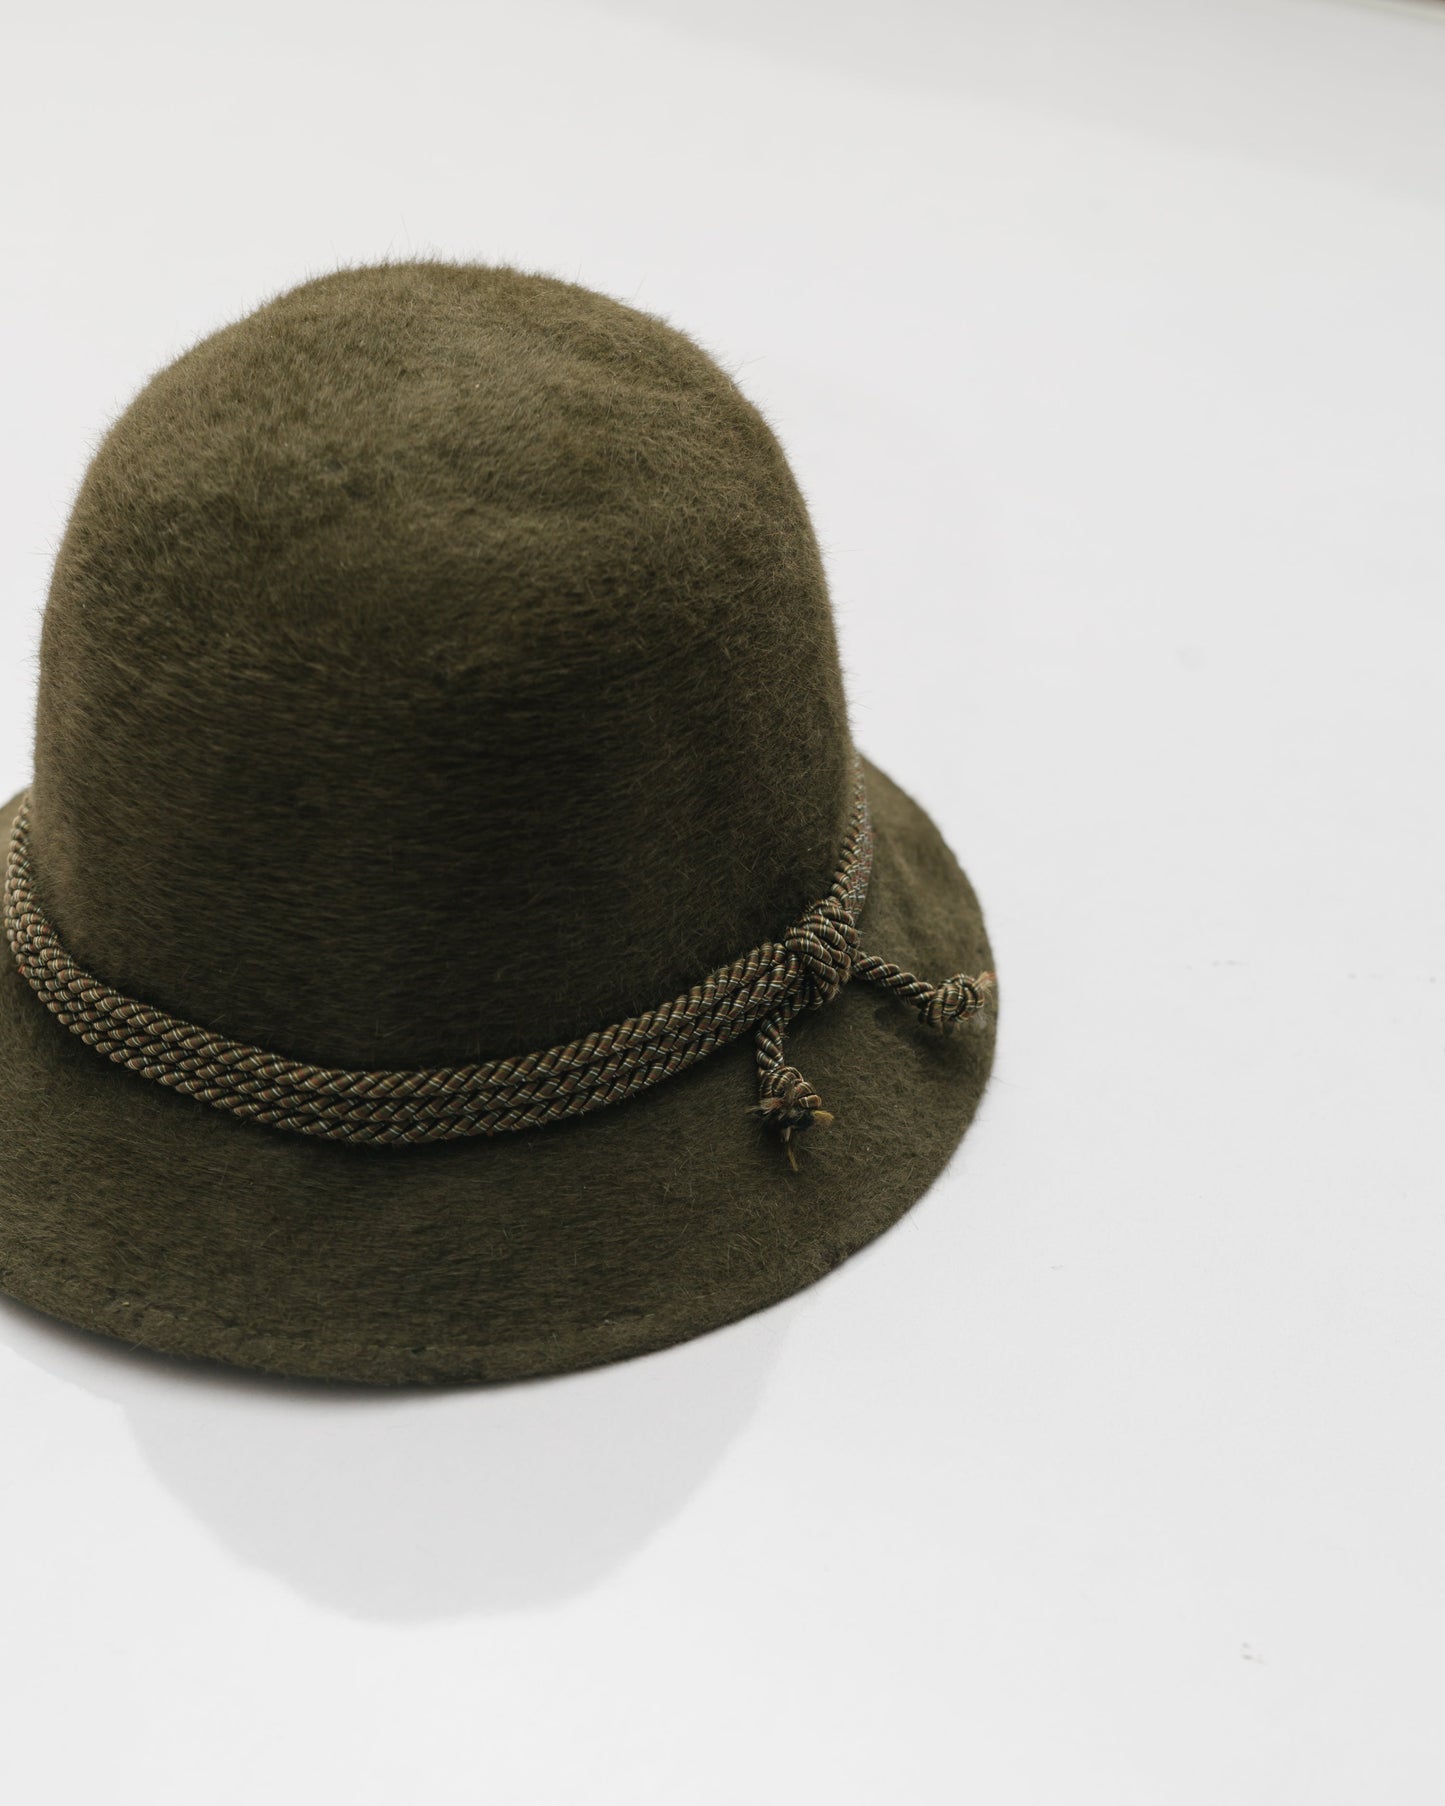 Vintage Leather Lined Fedora Hat